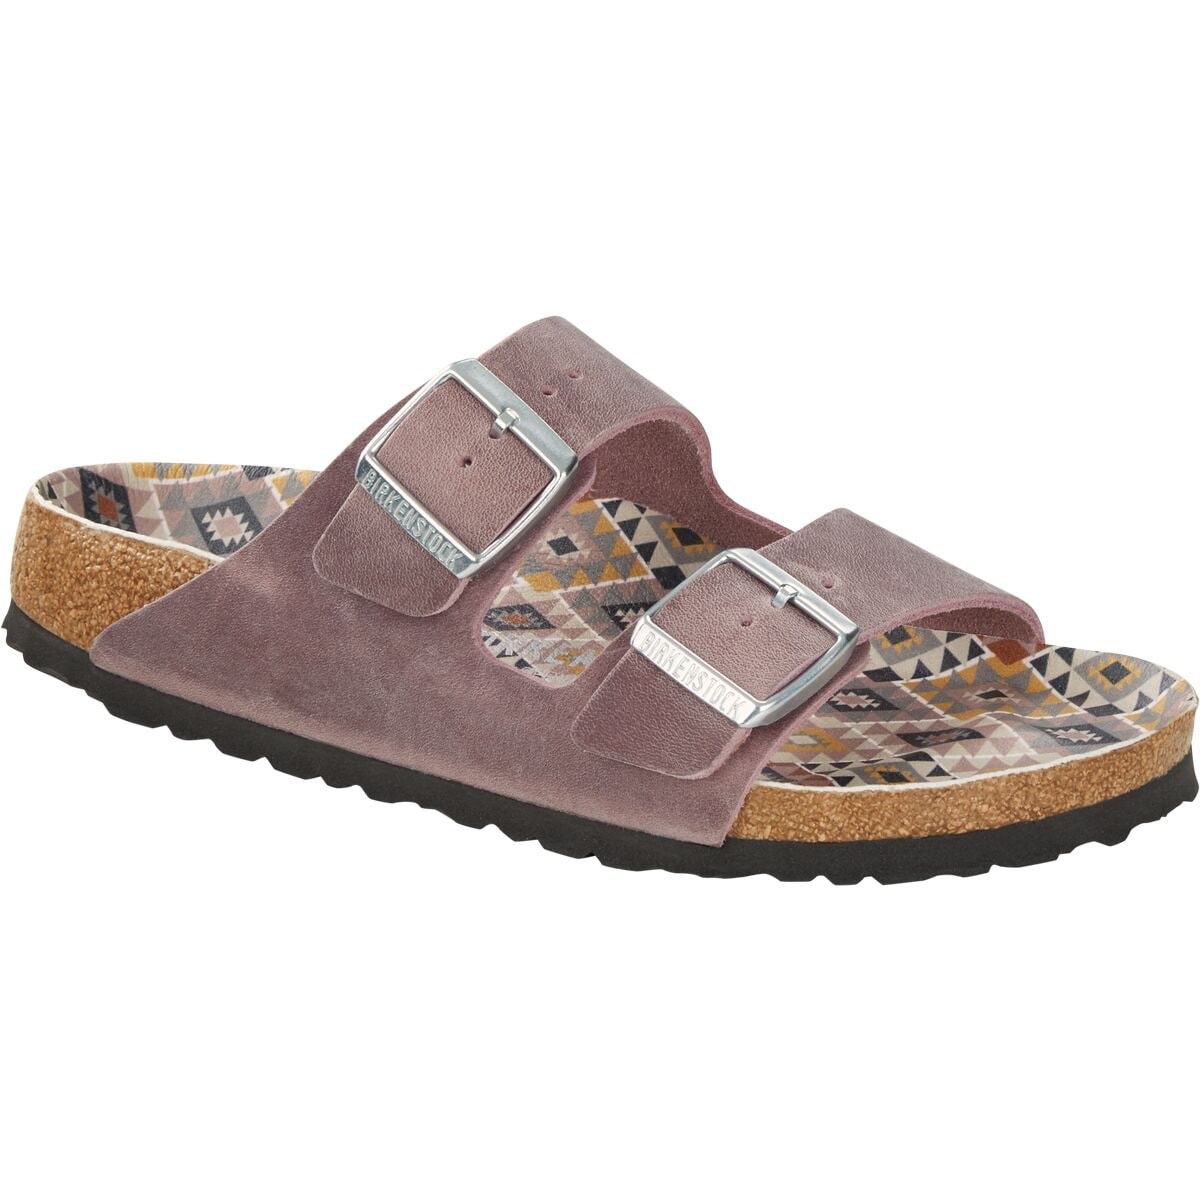 Arizona Limited Edition Narrow Sandal - Women